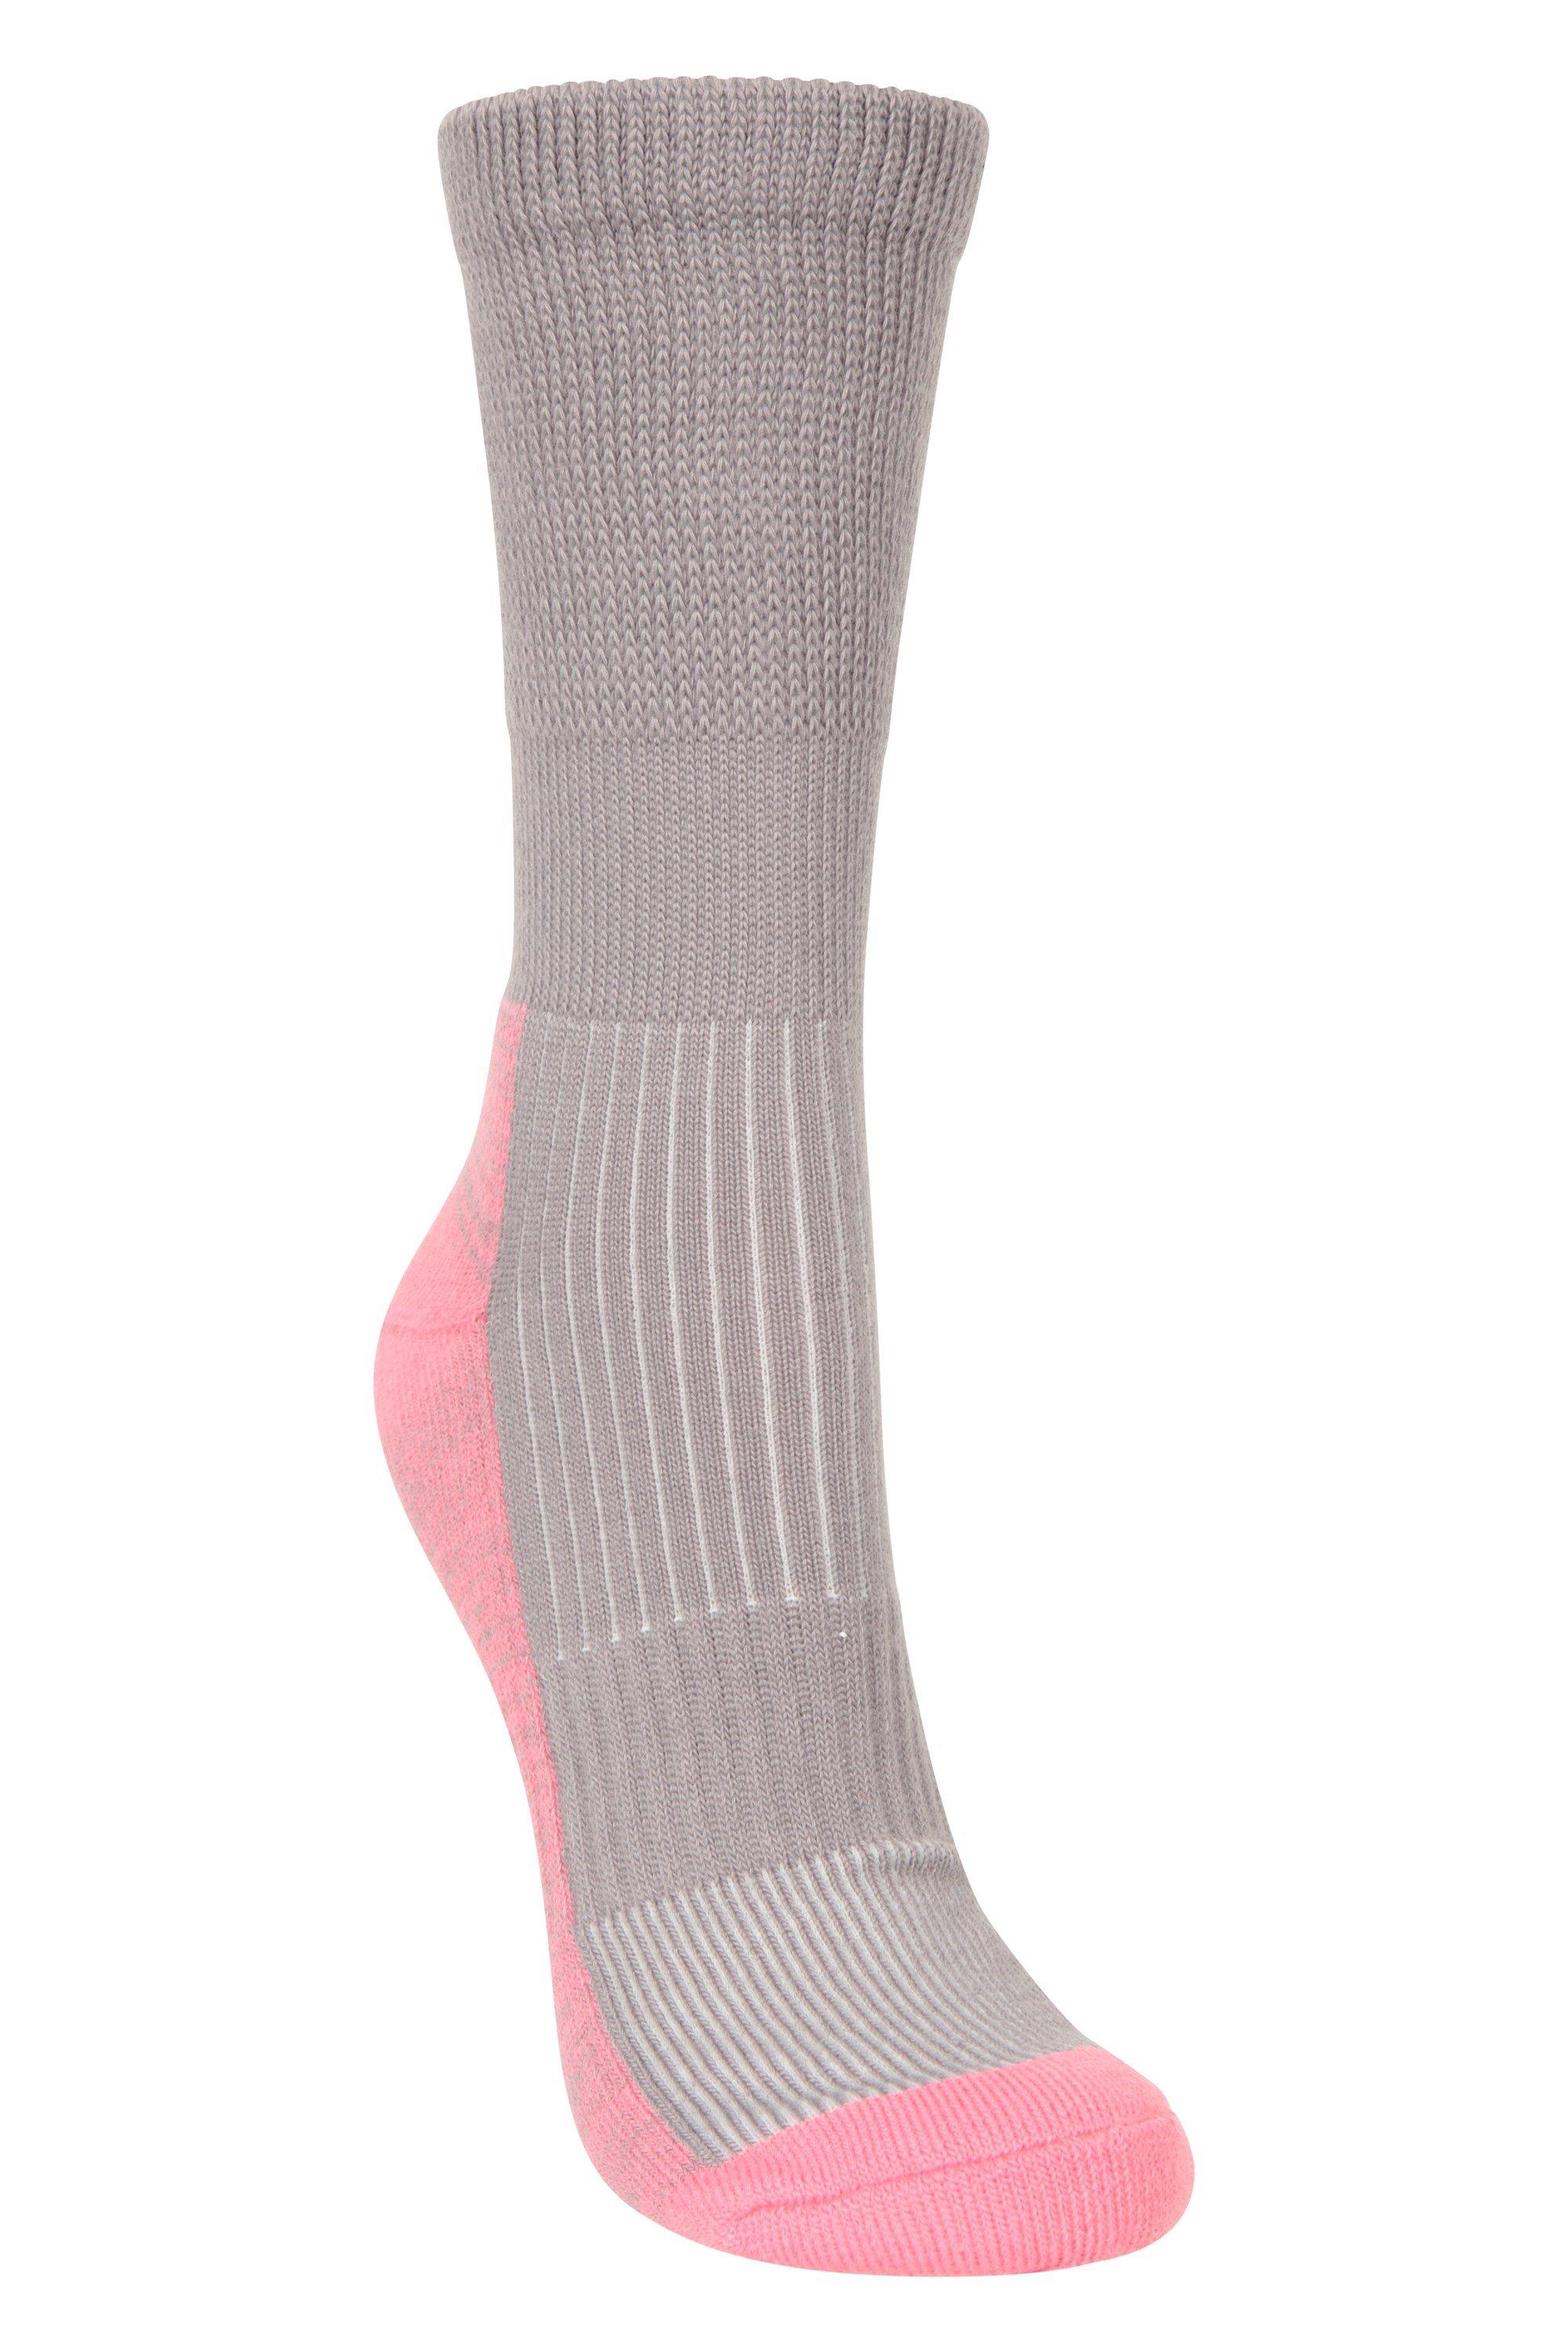 IsoCool  Hiker Sock Lightweight Durable  Socks